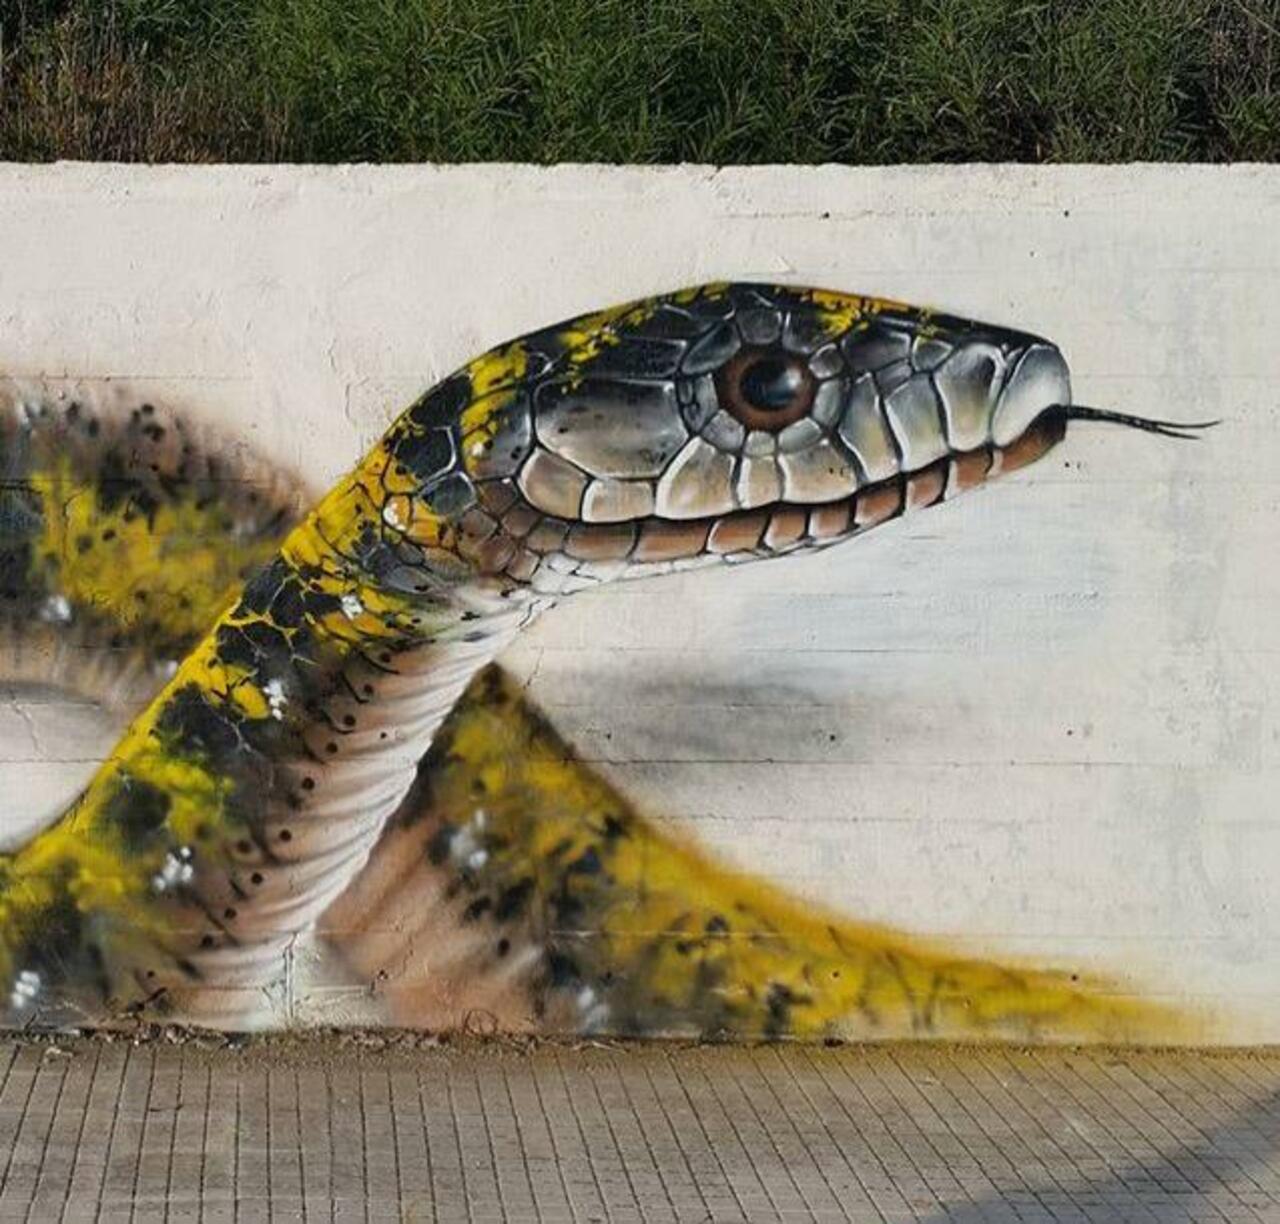 Street Art by Cosimocheone 

#art #graffiti #mural #streetart http://t.co/7Il5pDlbOP